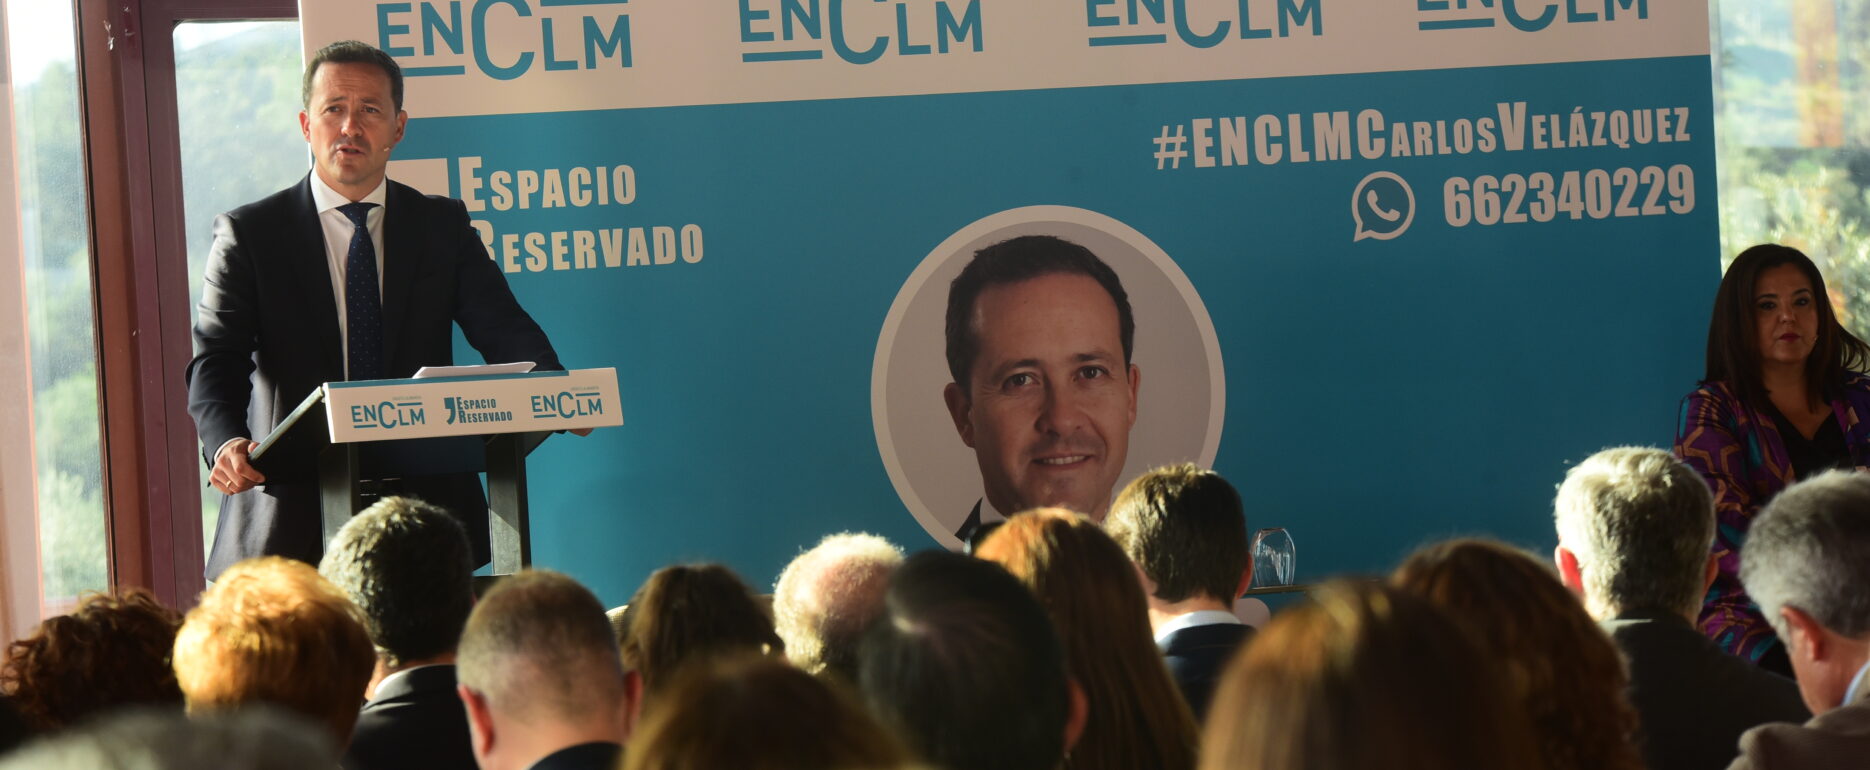 Carlos Velázquez, candidato del PP a la Alcaldía de Toledo. Foto: Rebeca Arango.